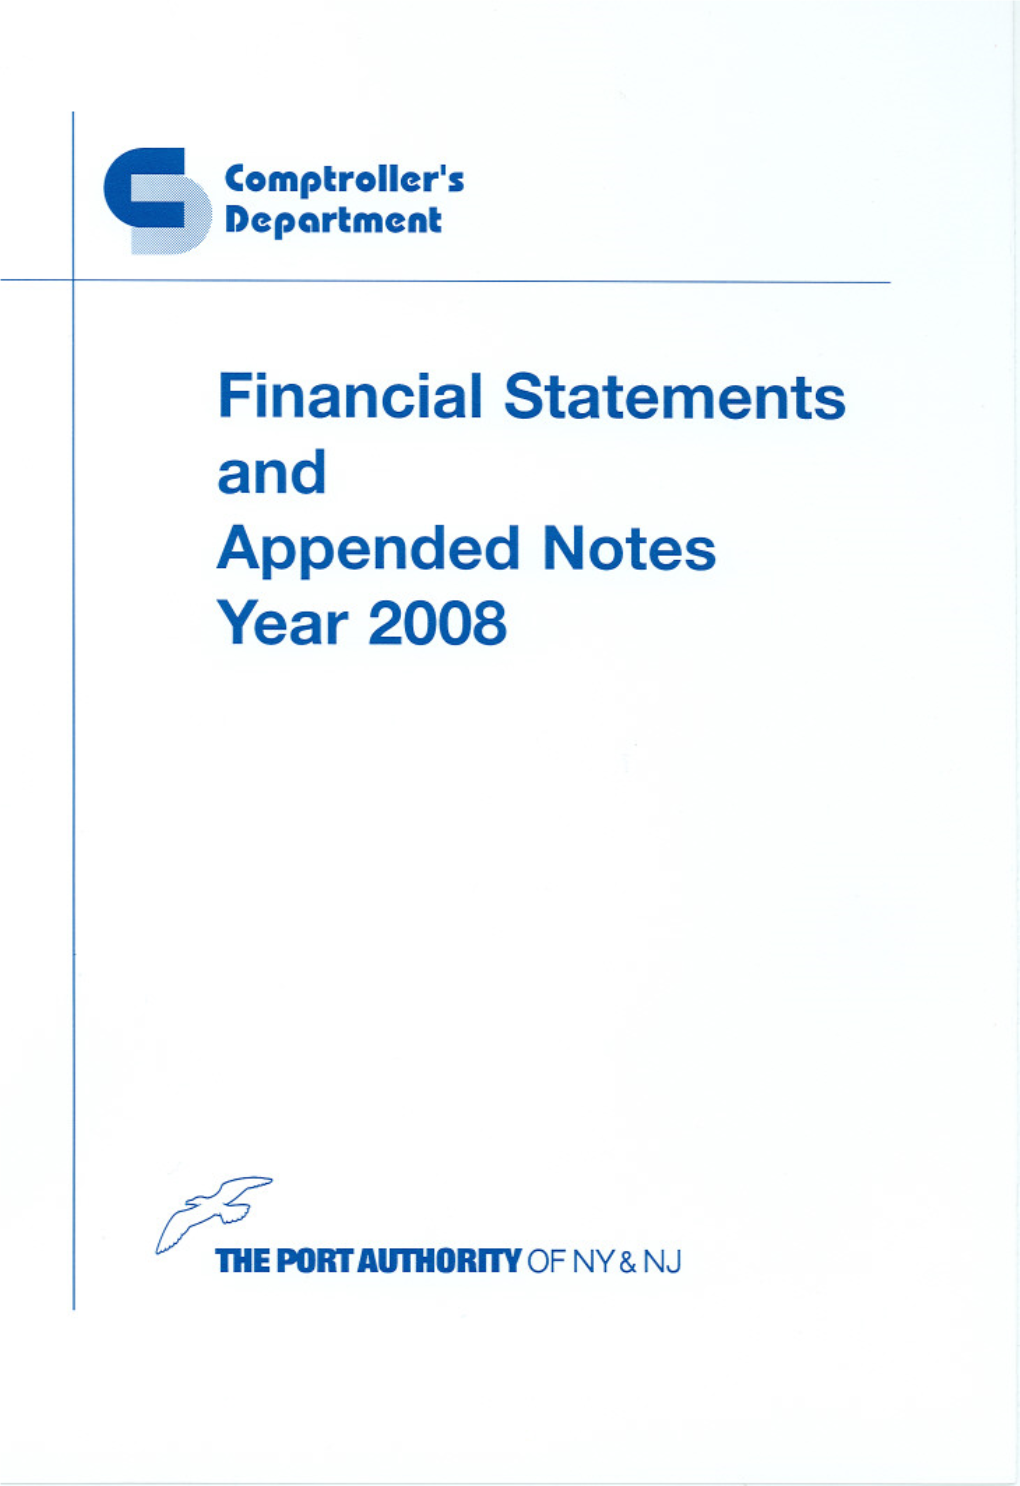 Financial-Statement-2008.Pdf